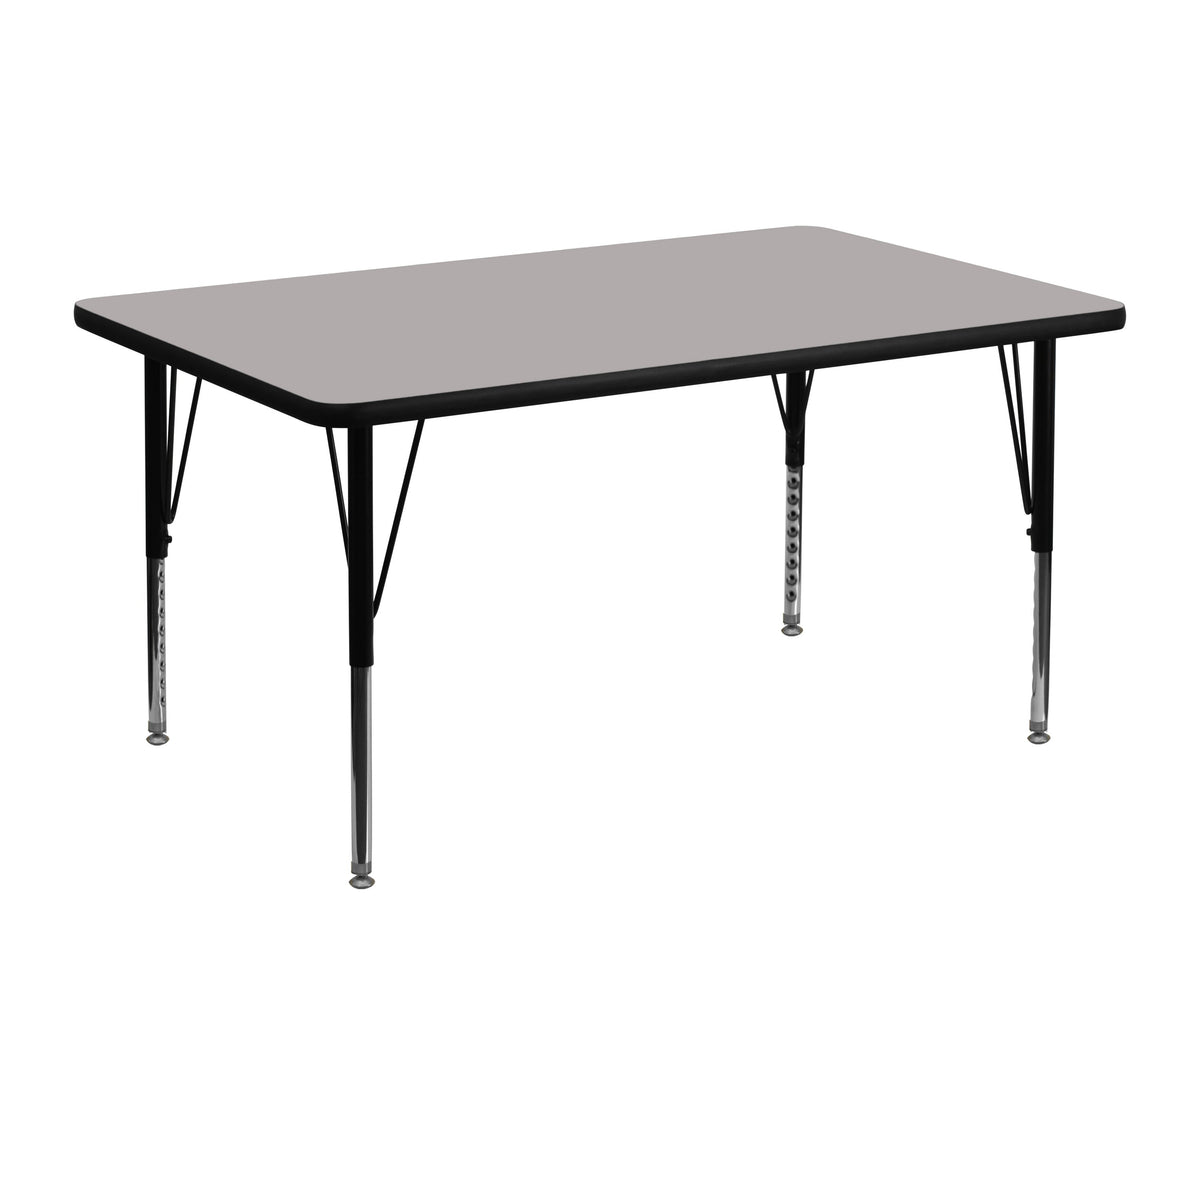 Gray |#| 30inchW x 48inchL Rectangular Grey HP Laminate Activity Table - Height Adjustable Legs